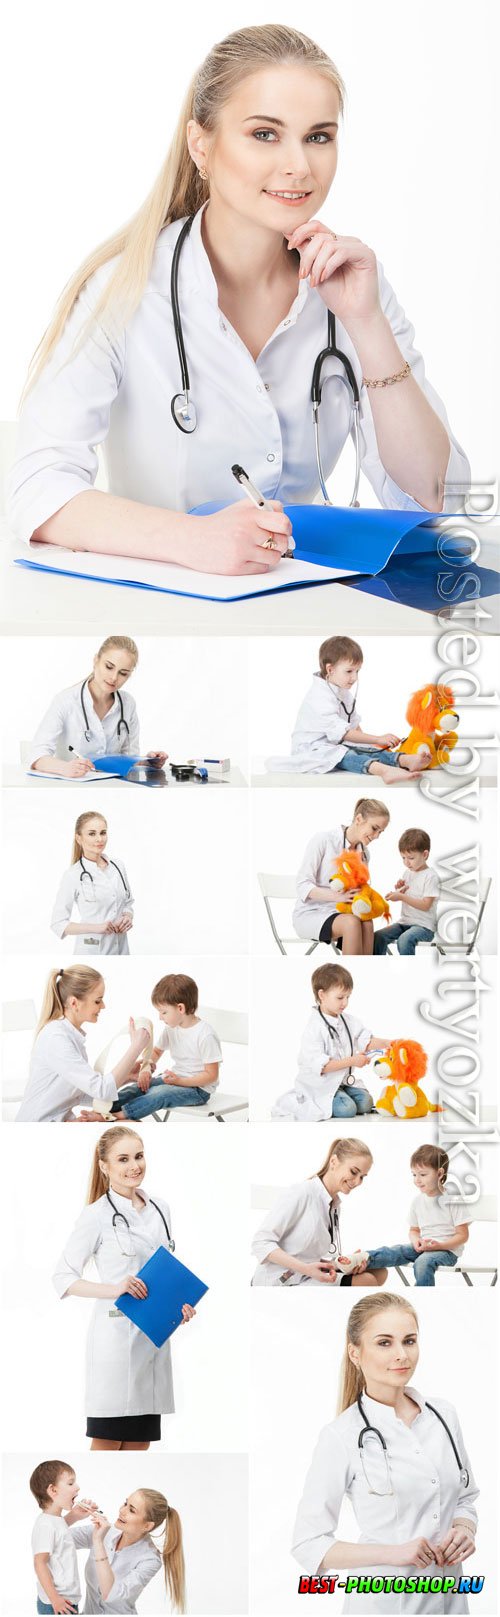 Woman pediatrician stock photo